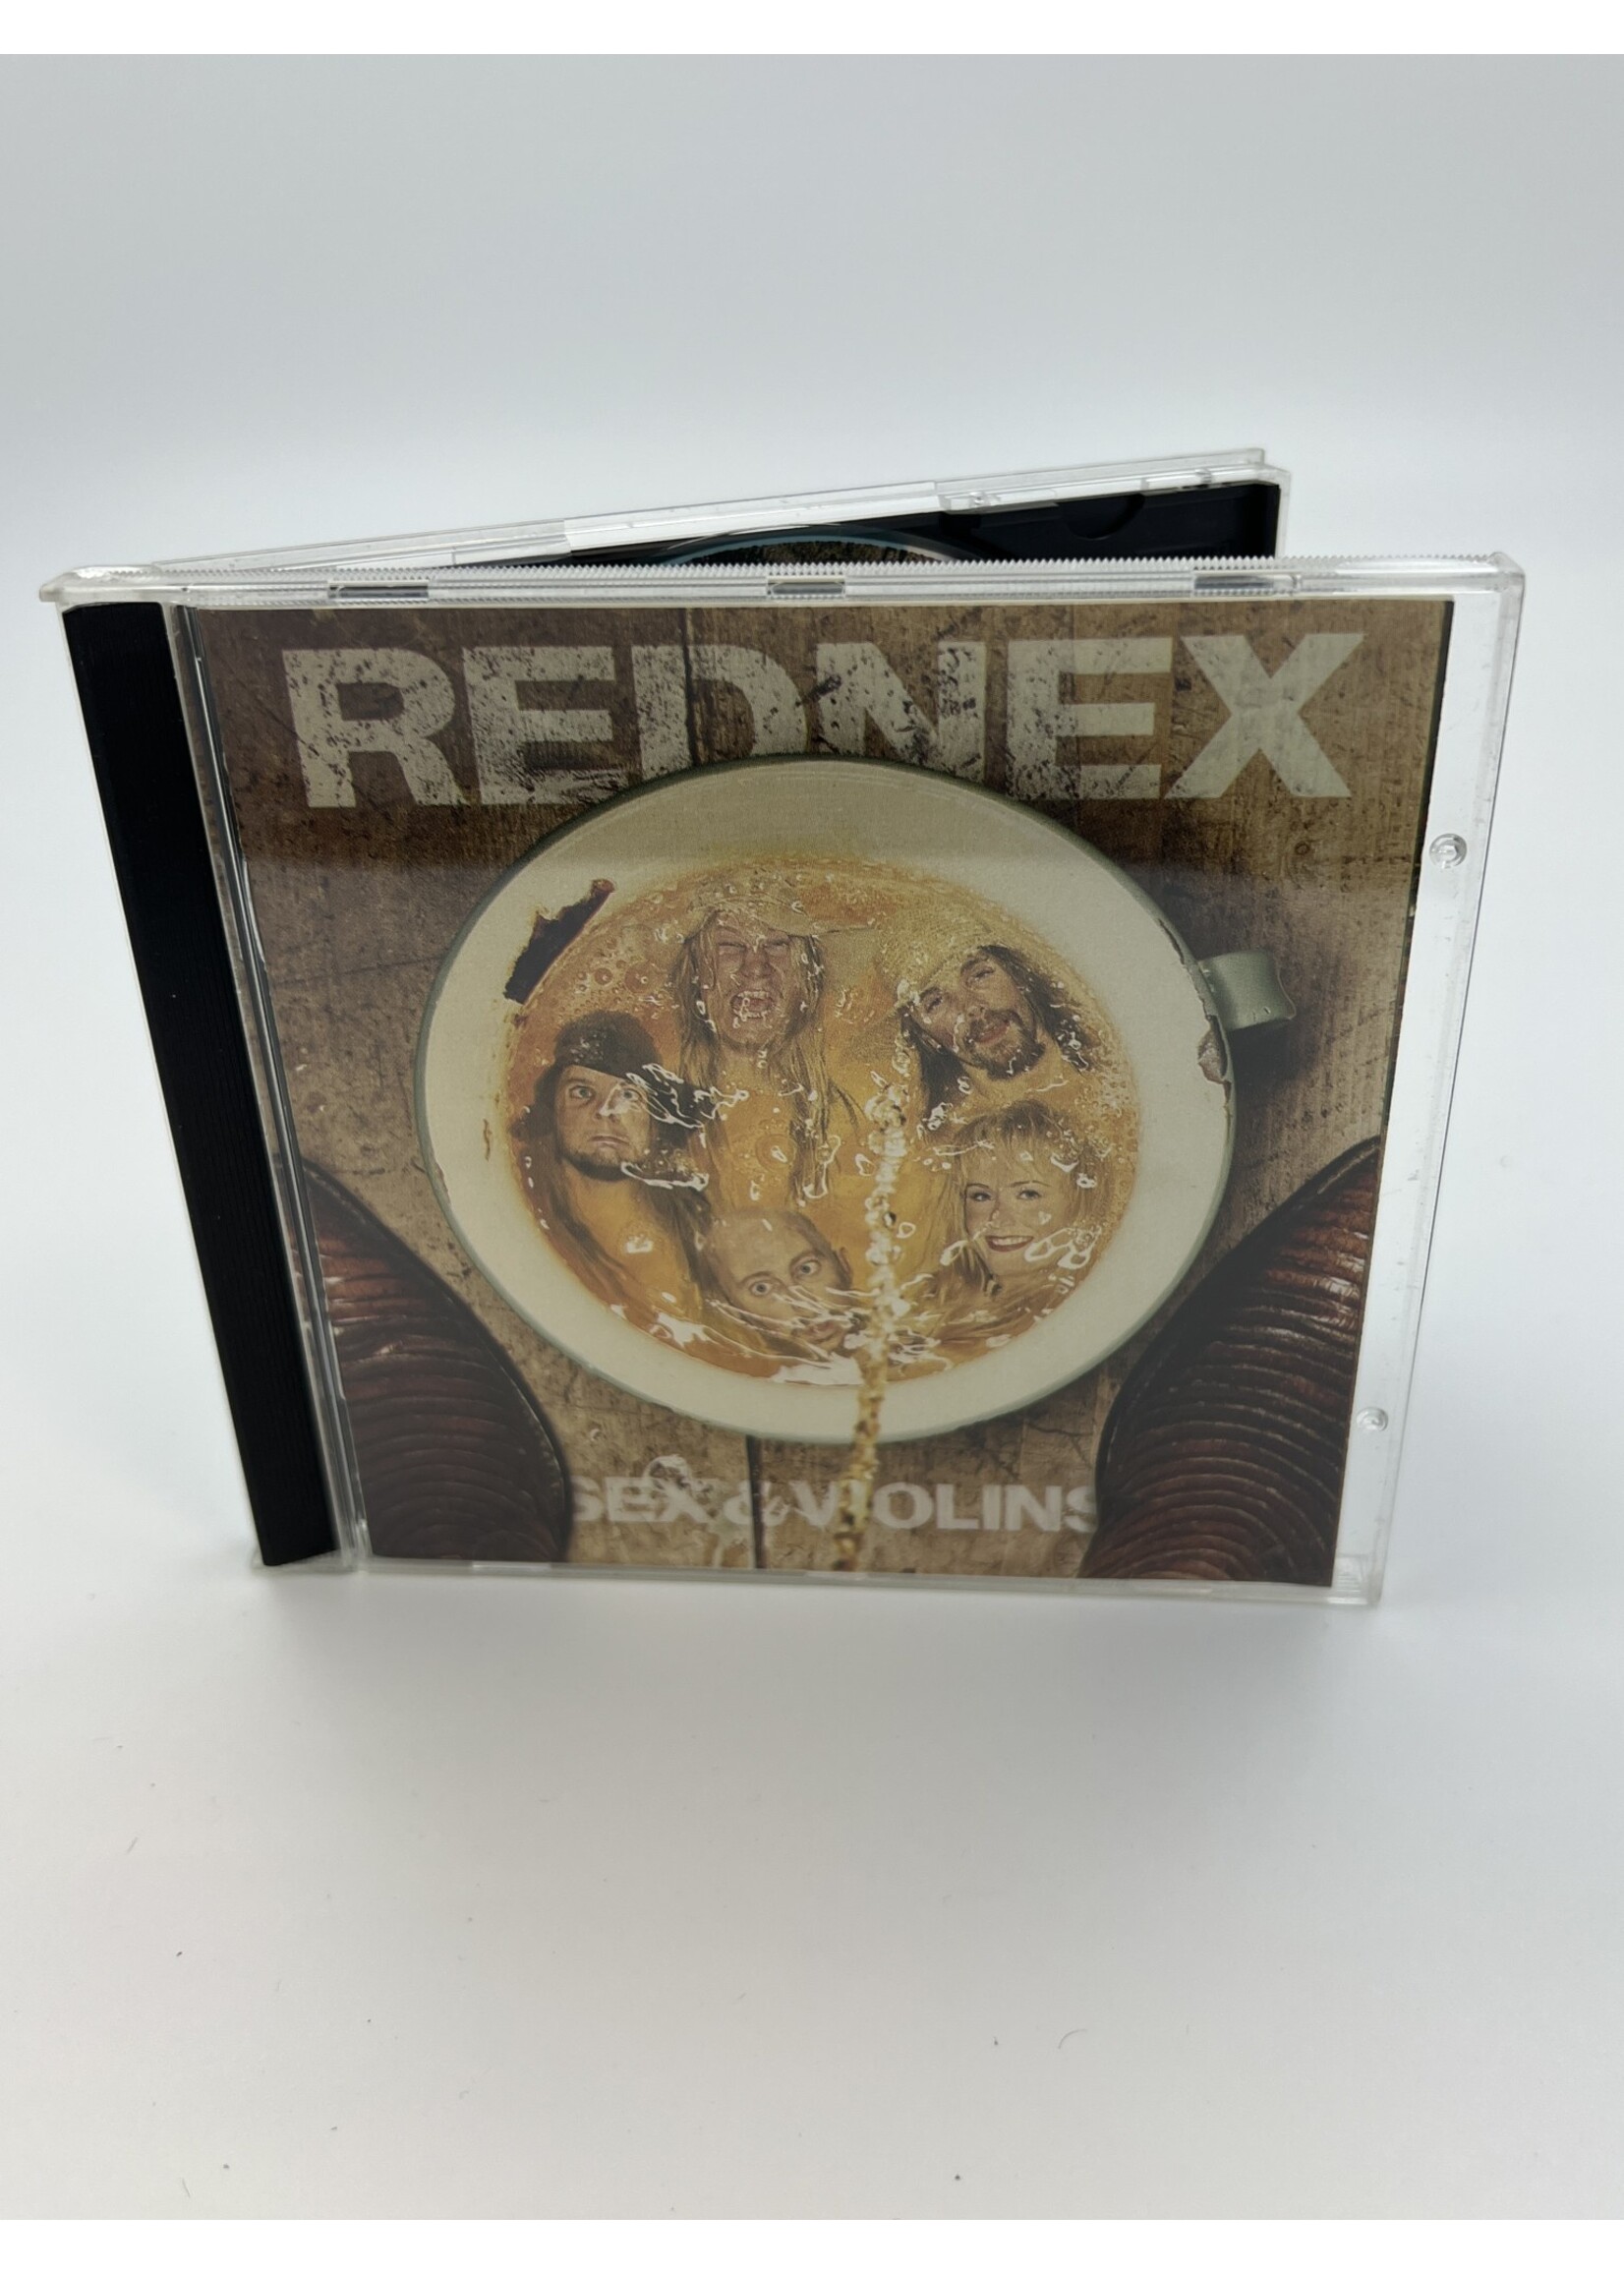 CD Rednex Sex And Violins CD